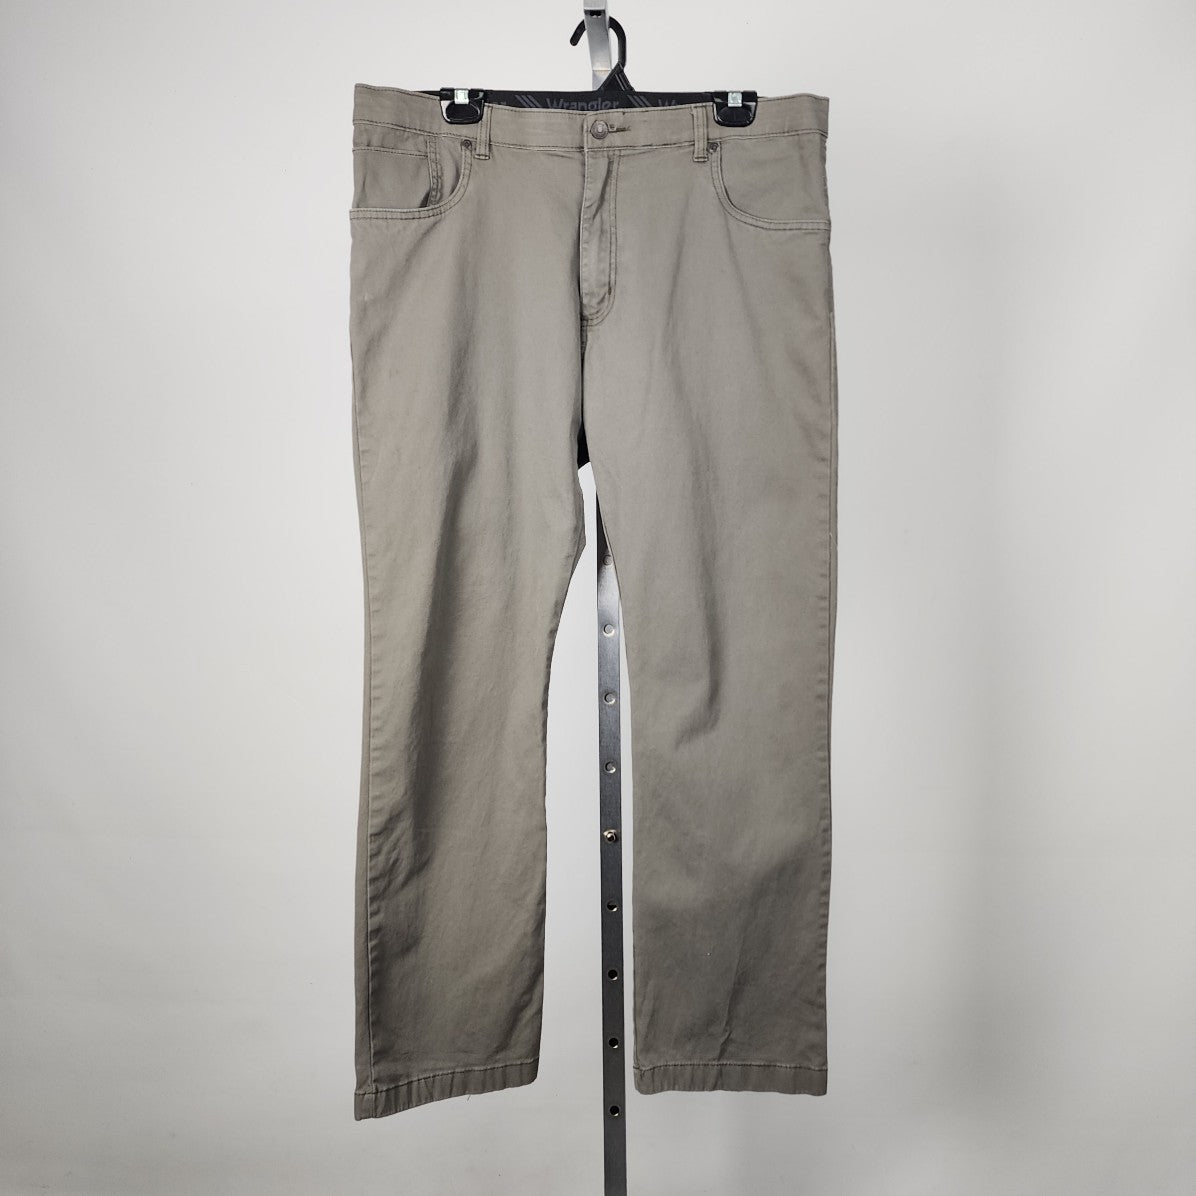 Wrangler Grey Straight Leg Pants Size 36/30